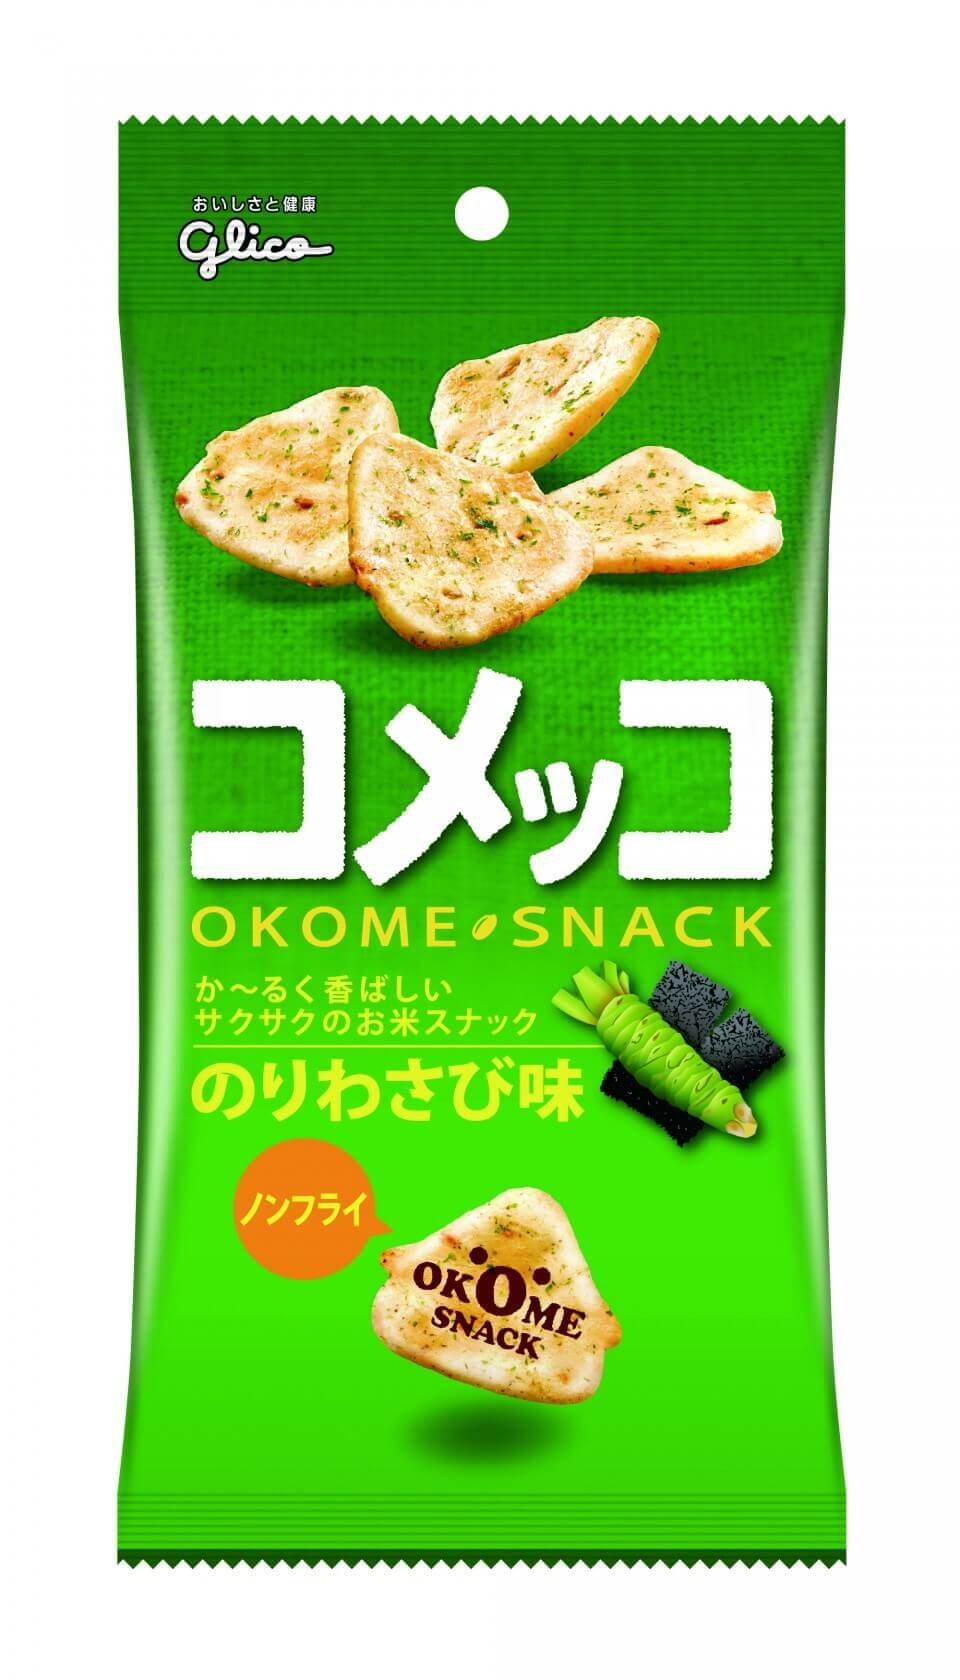 Glico Komeko - Seaweed Wasabi Rice Cracker